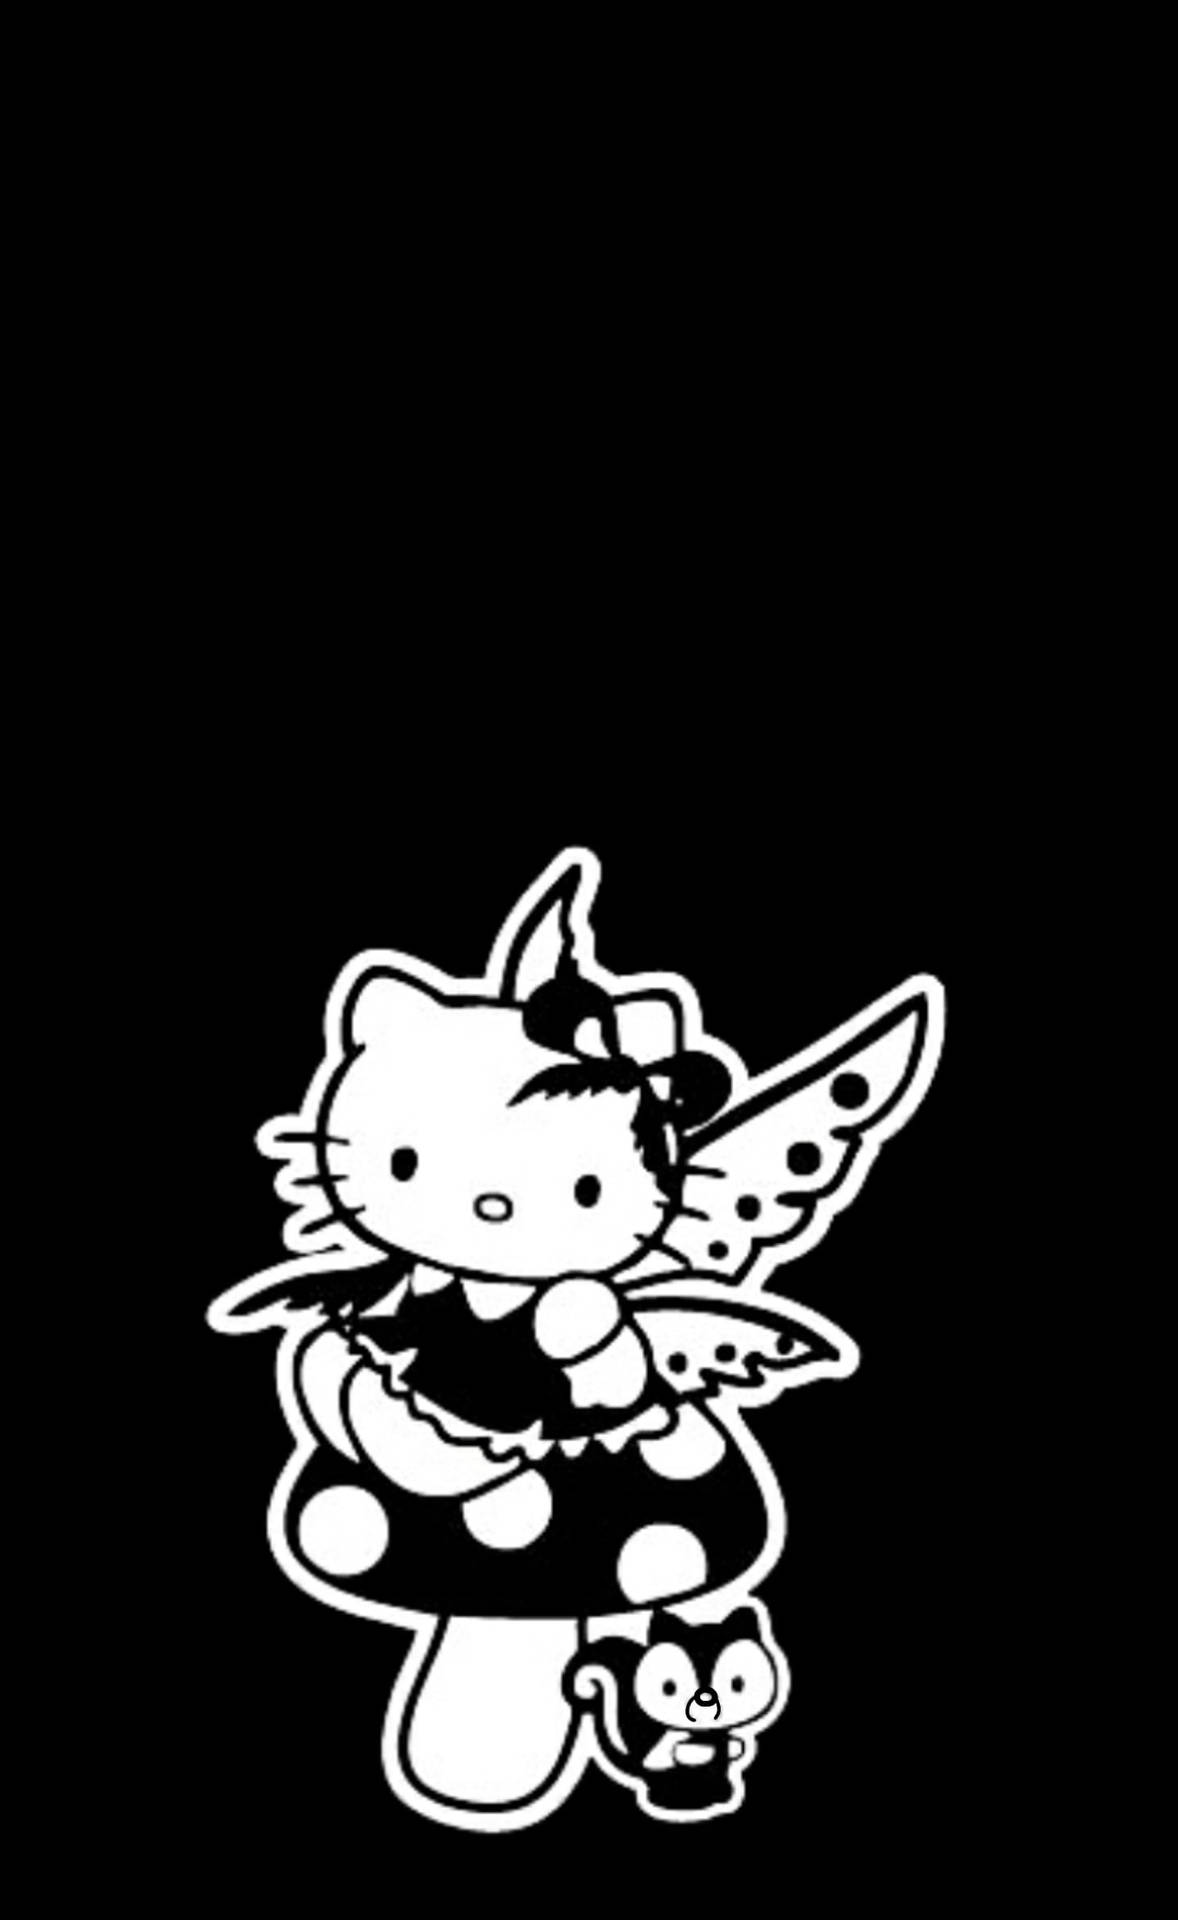 Black Hello Kitty In Fairy Costume Background